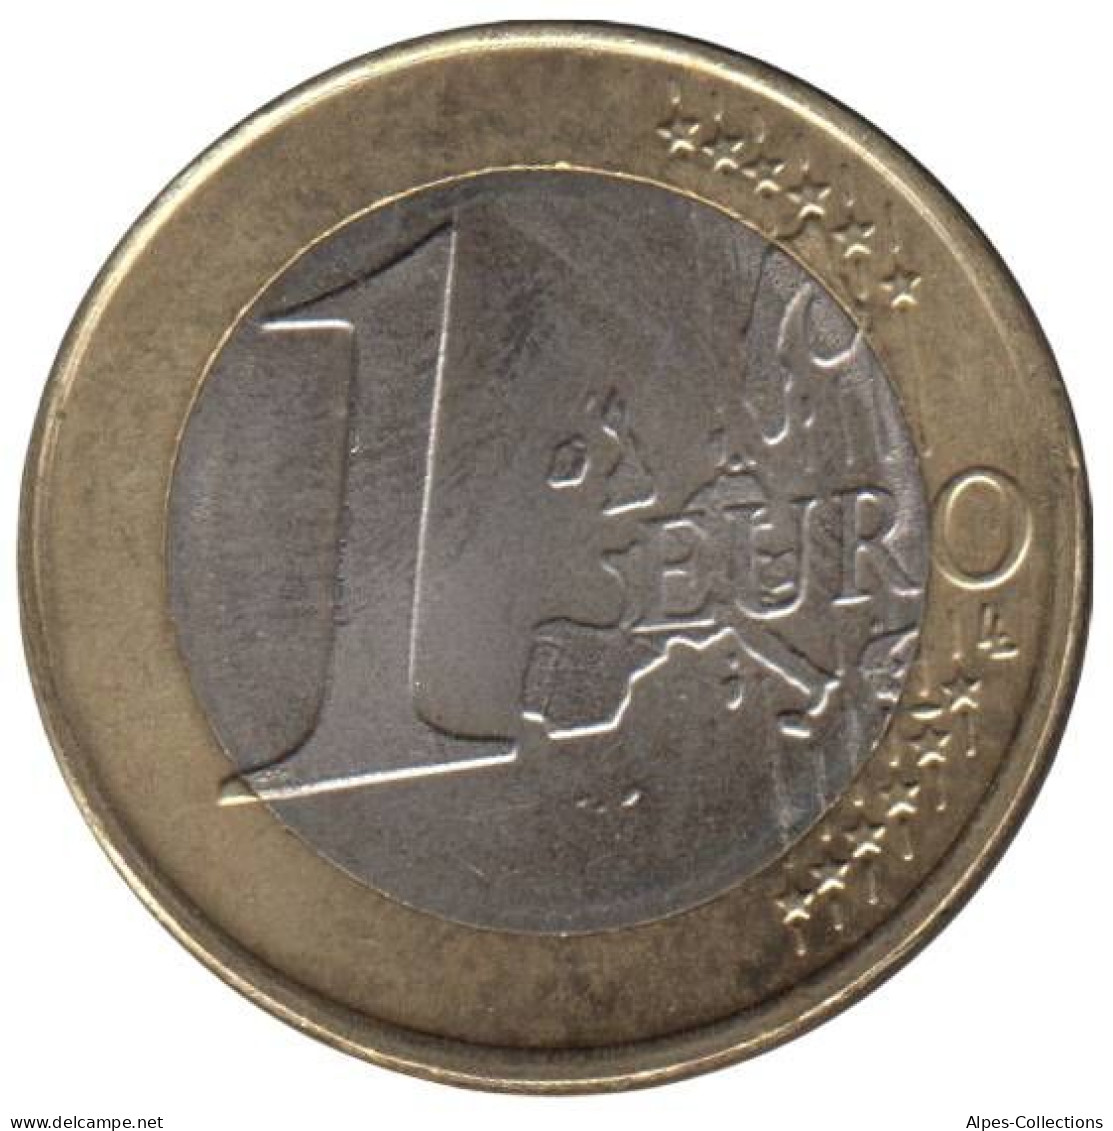 GR10003.1 - GRECE - 1 Euro - 2003 - Grecia